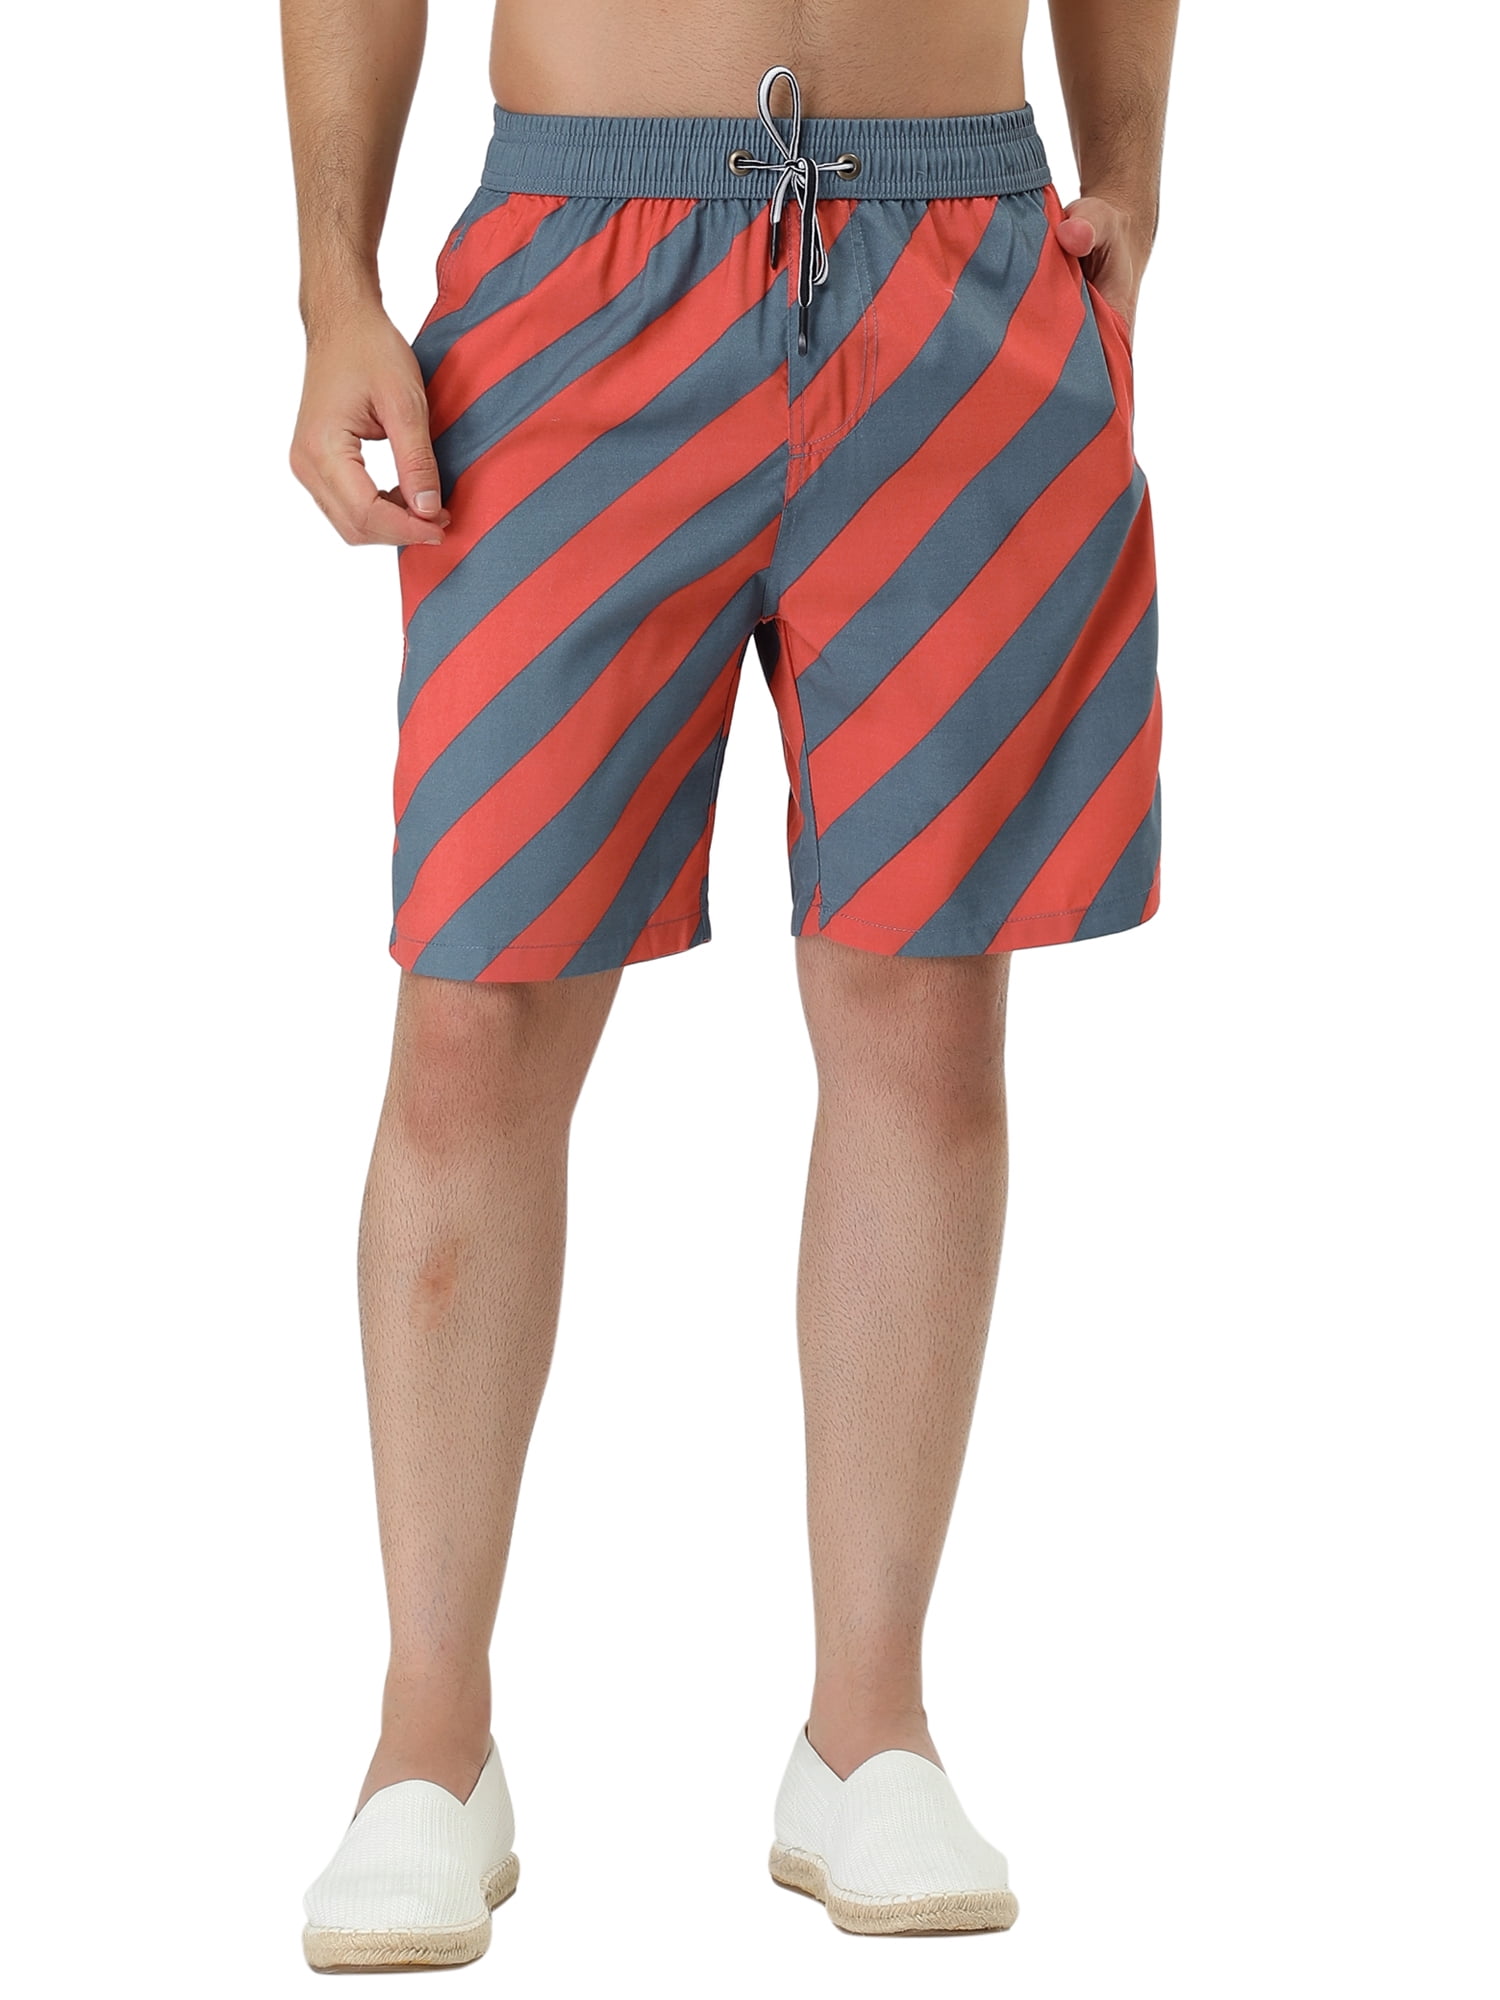 Mens Birds Color Pattern Shorts Lightweight Swim Trunks Beach Shorts,Boardshort